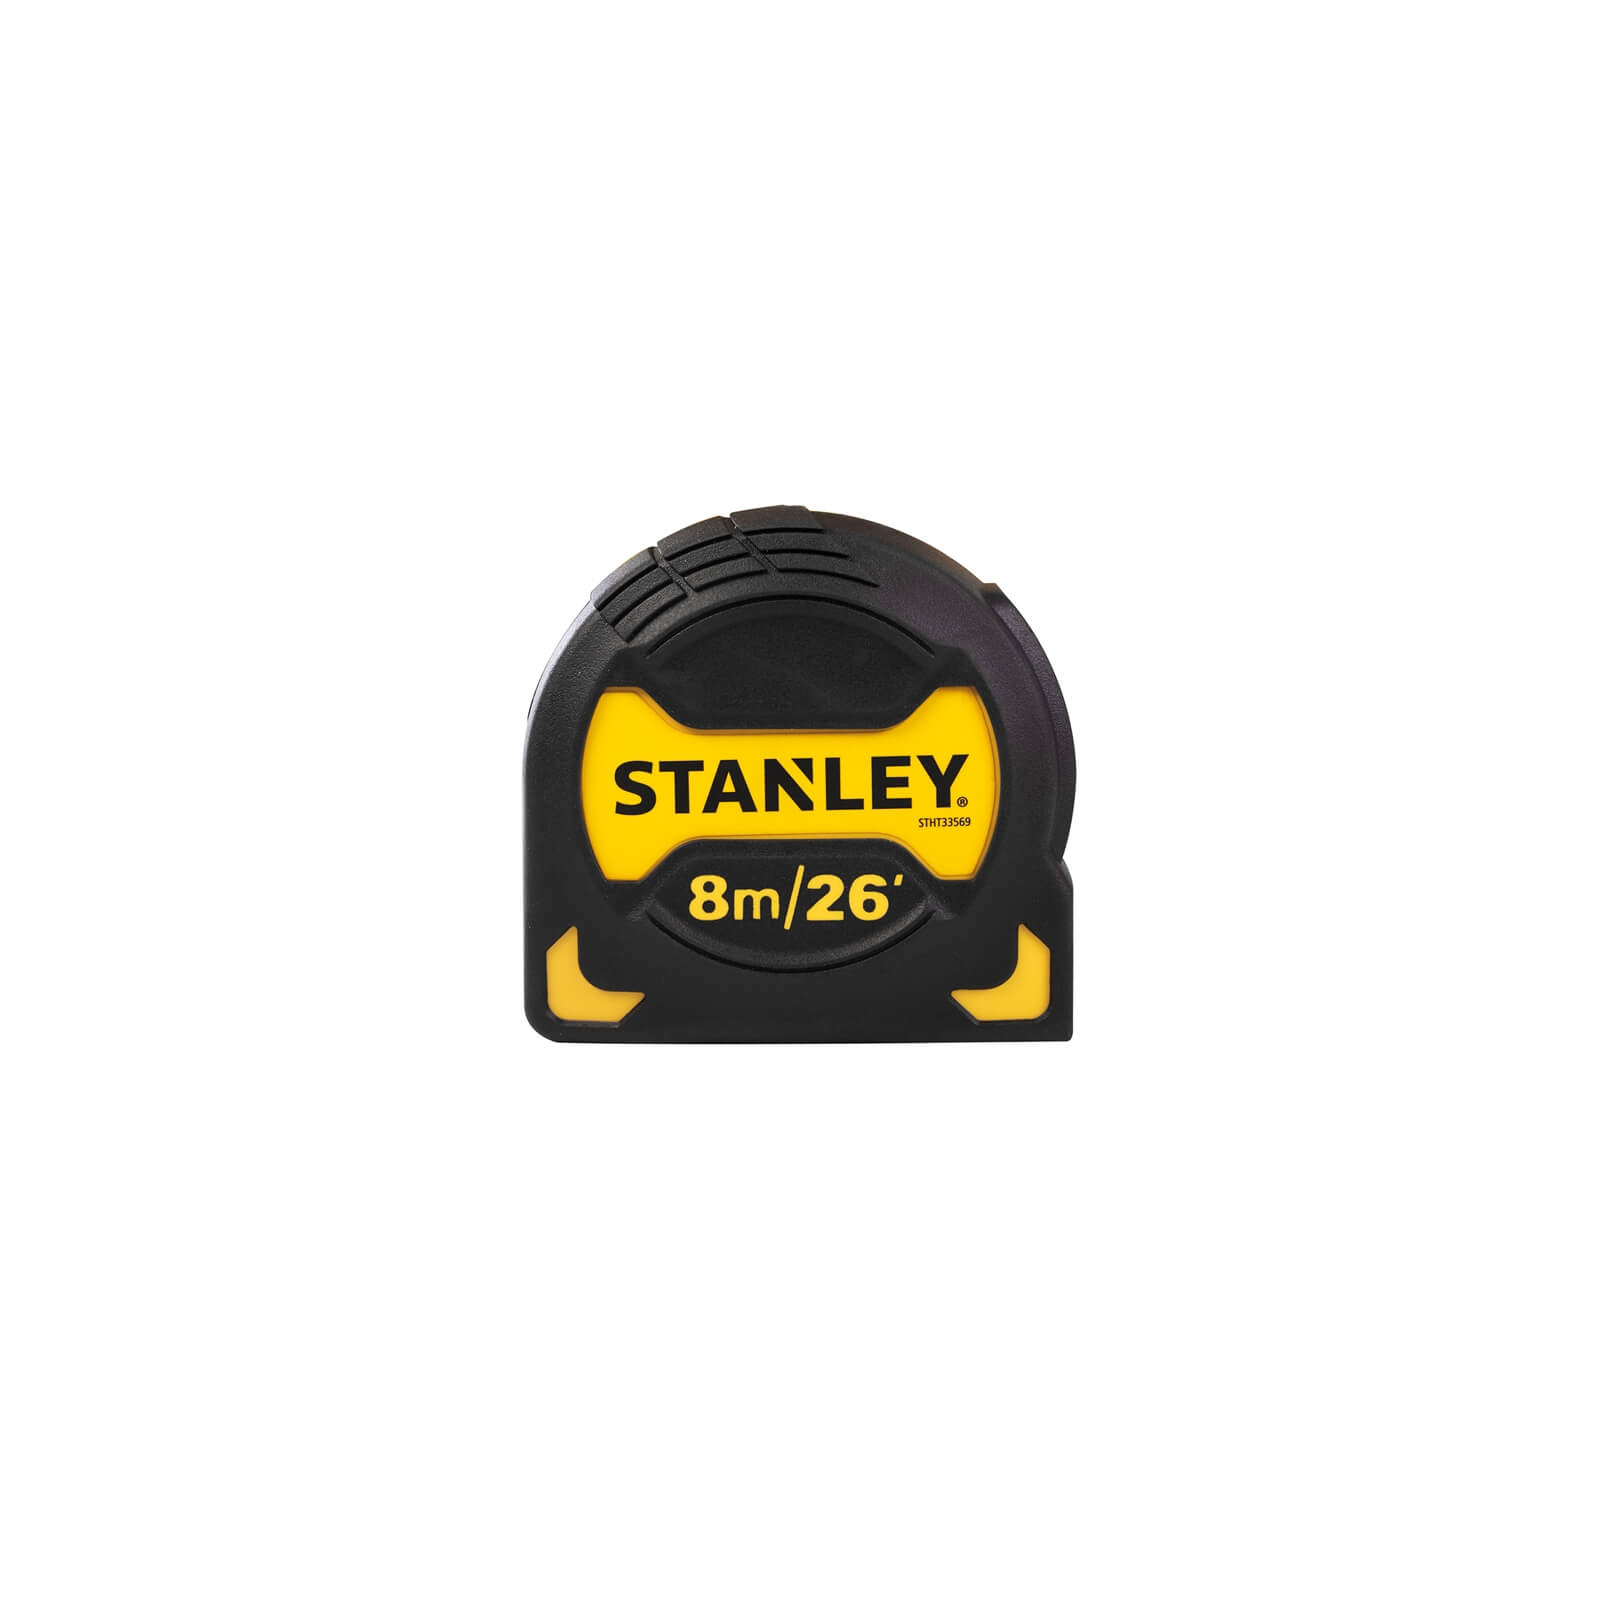 Stanley Grip Tape - 8m